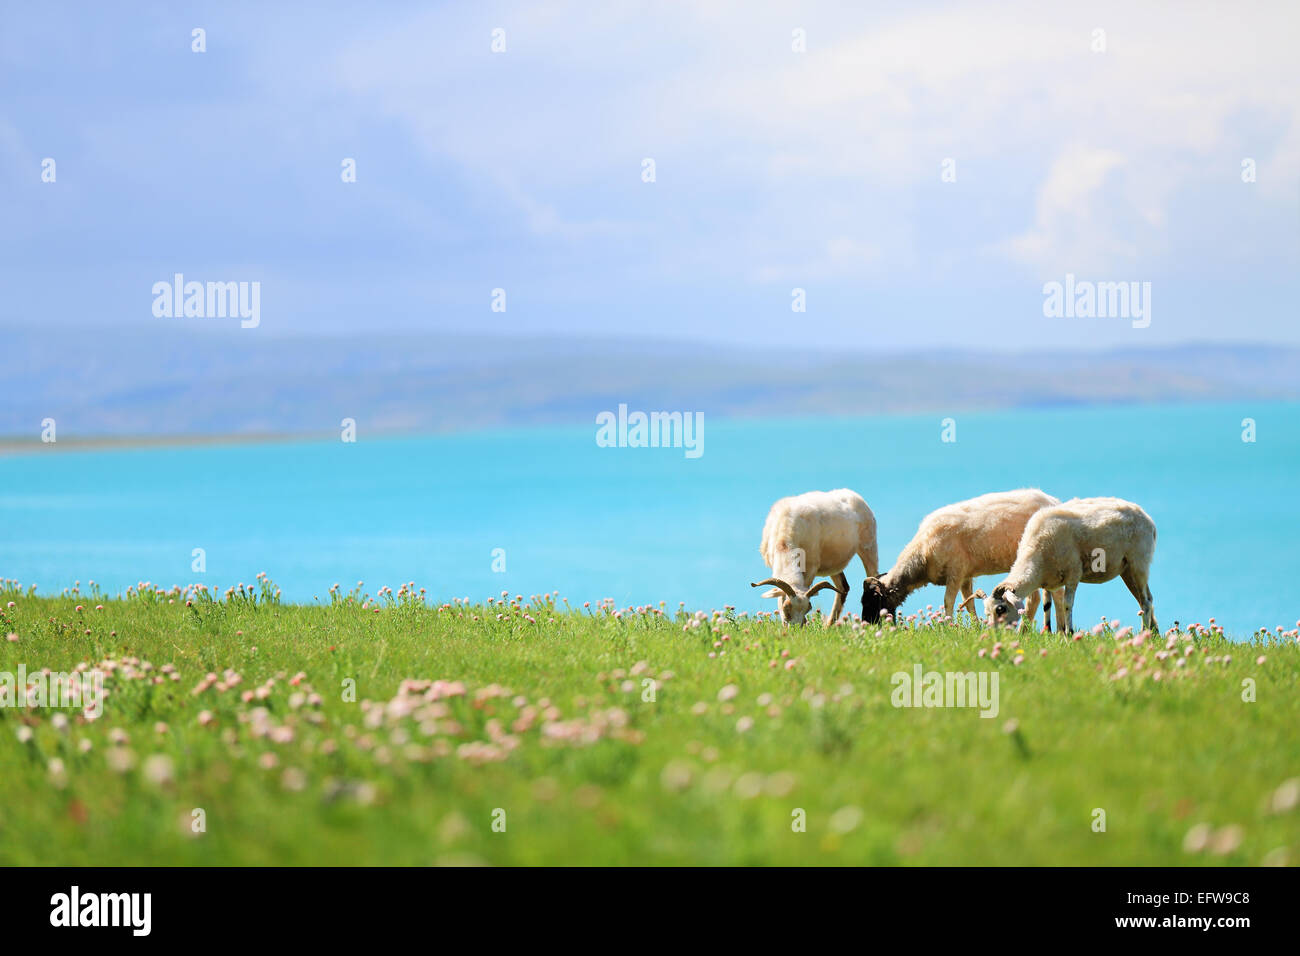 Sheep graze in meadow near lake Stock Photo